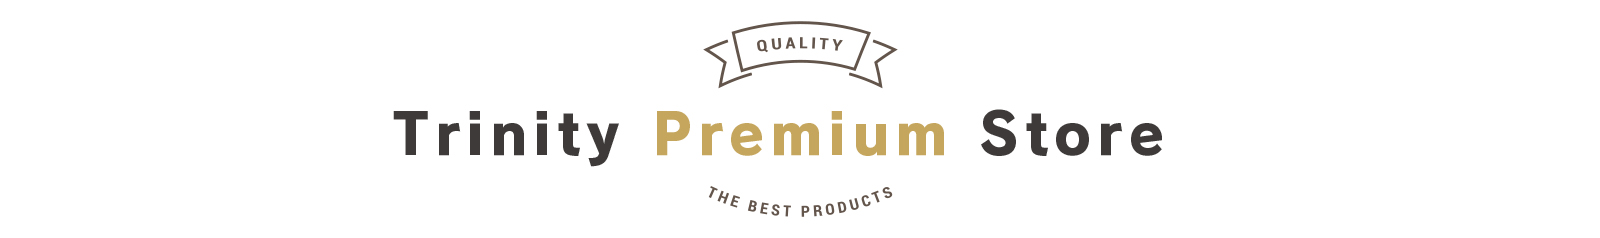 Trinity Premium Store